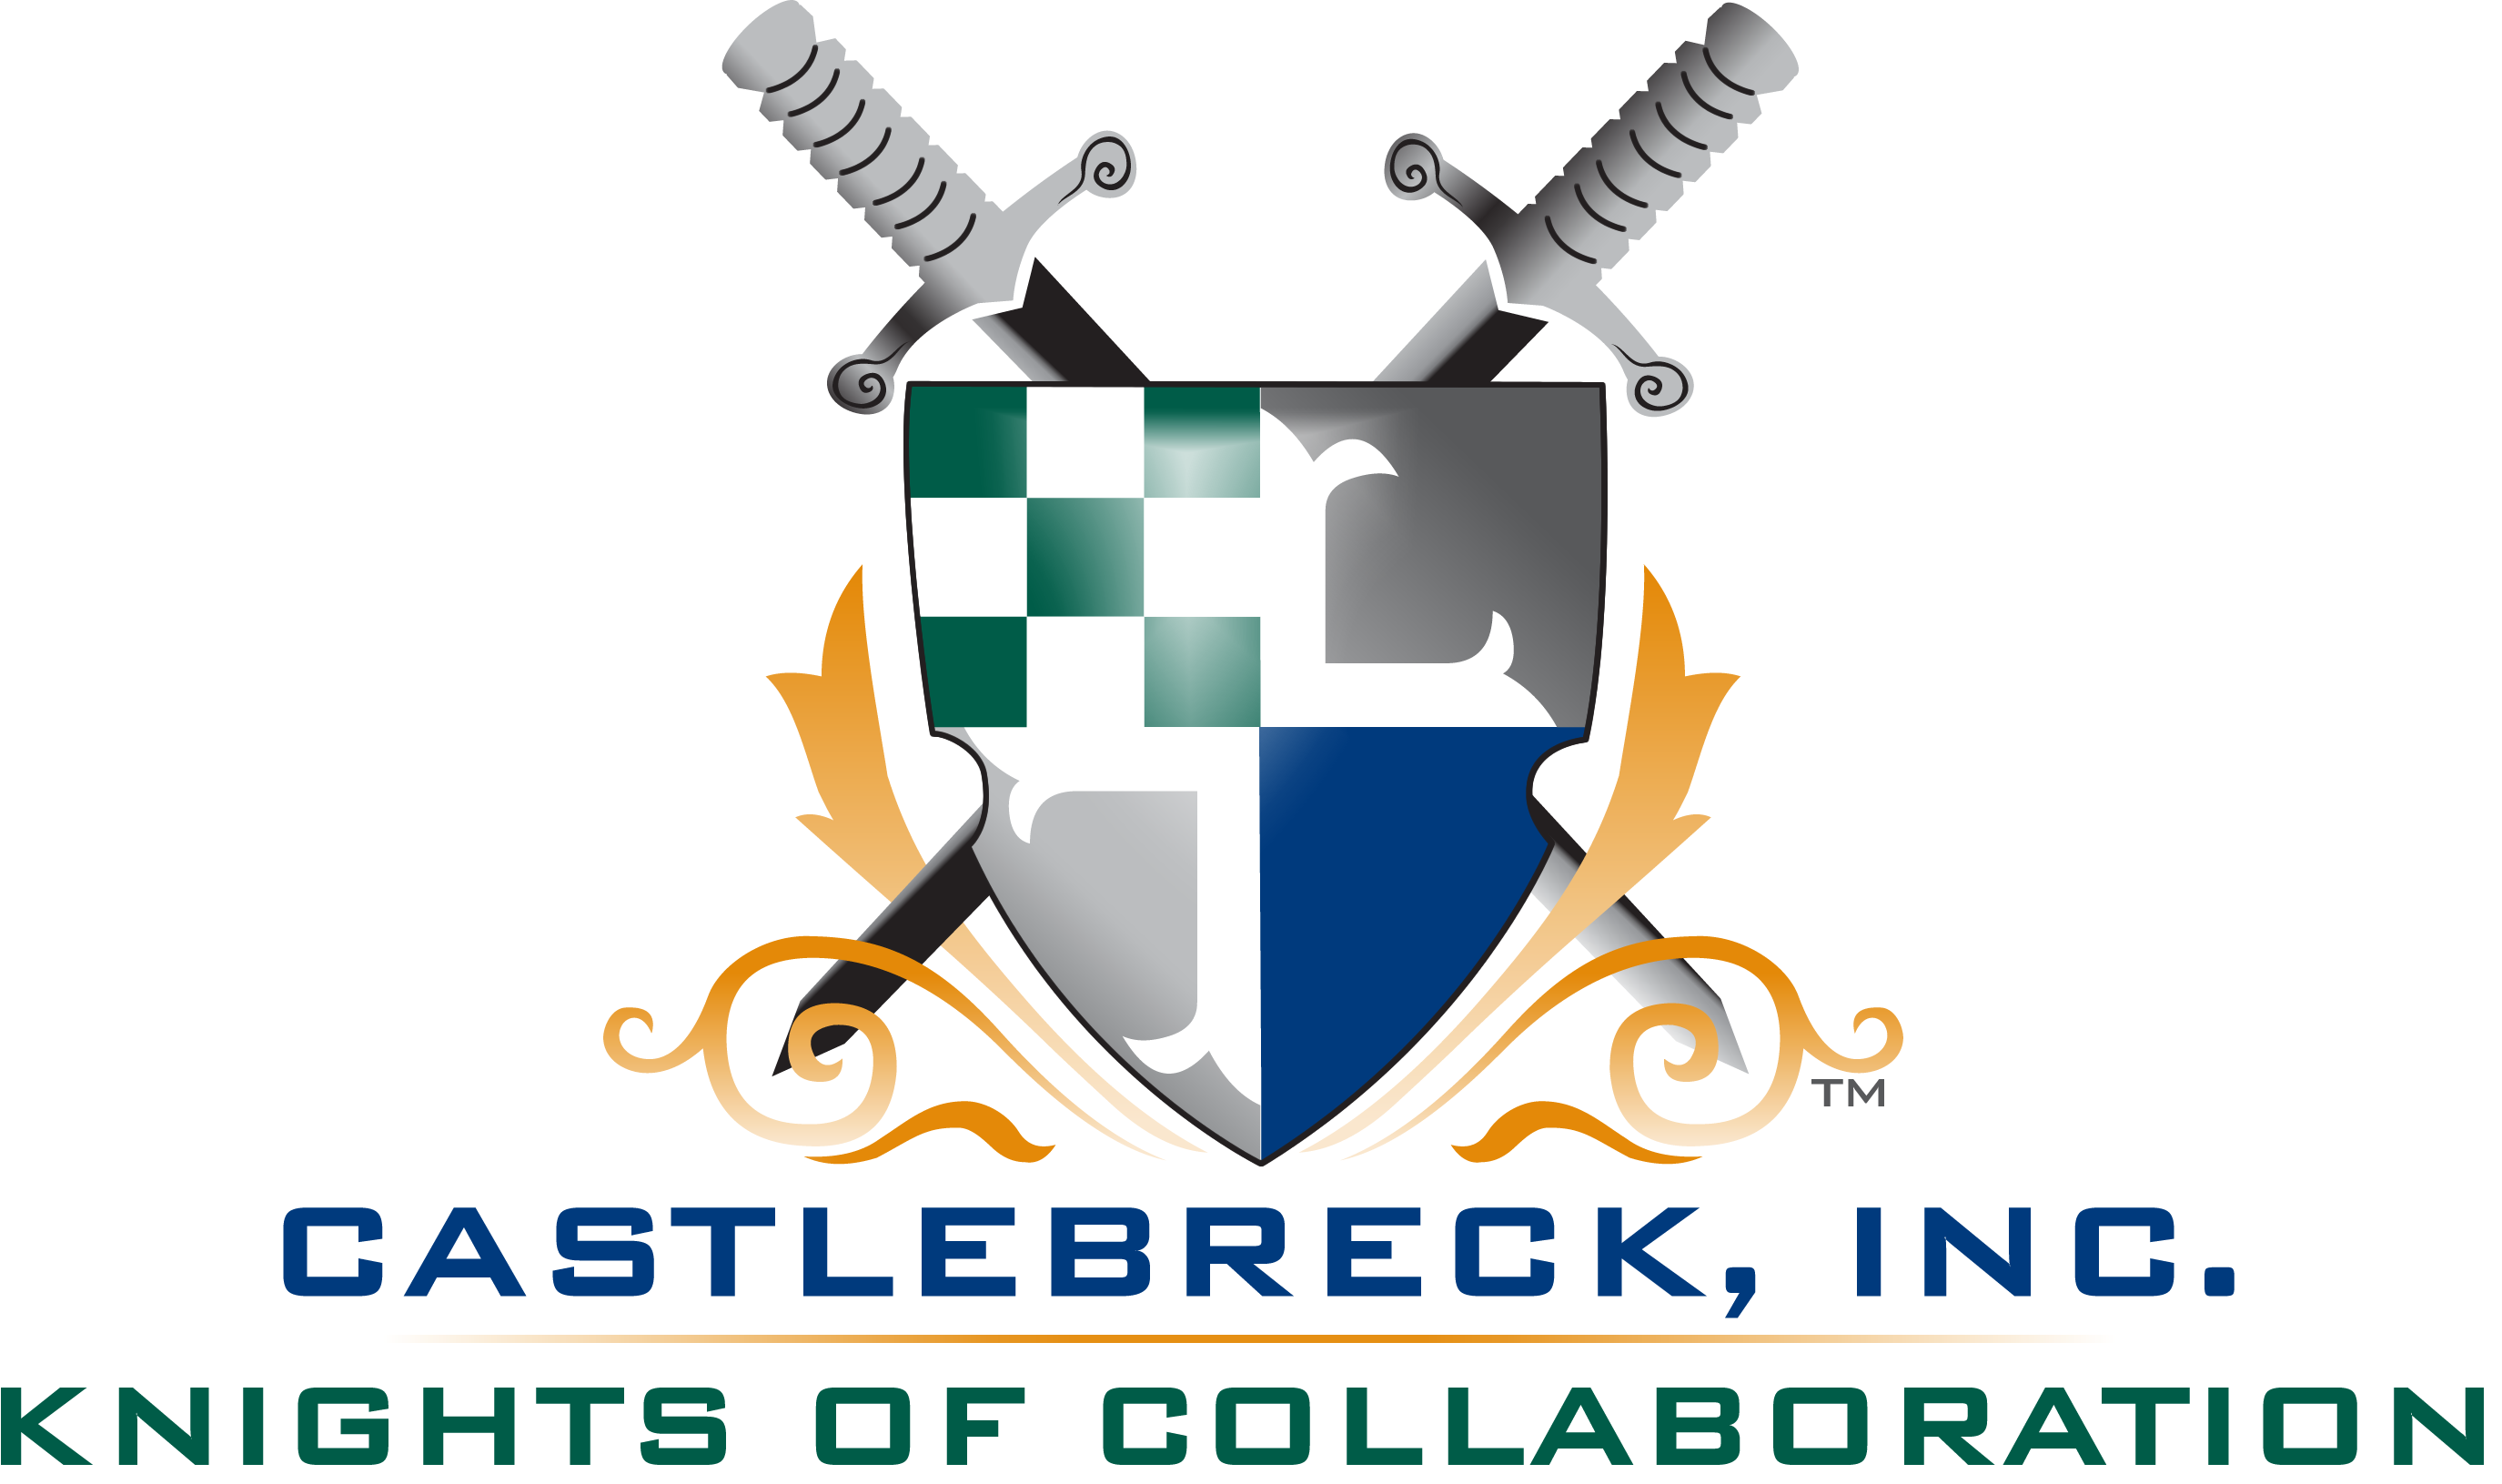 Castlebreck Knights of Collaboration